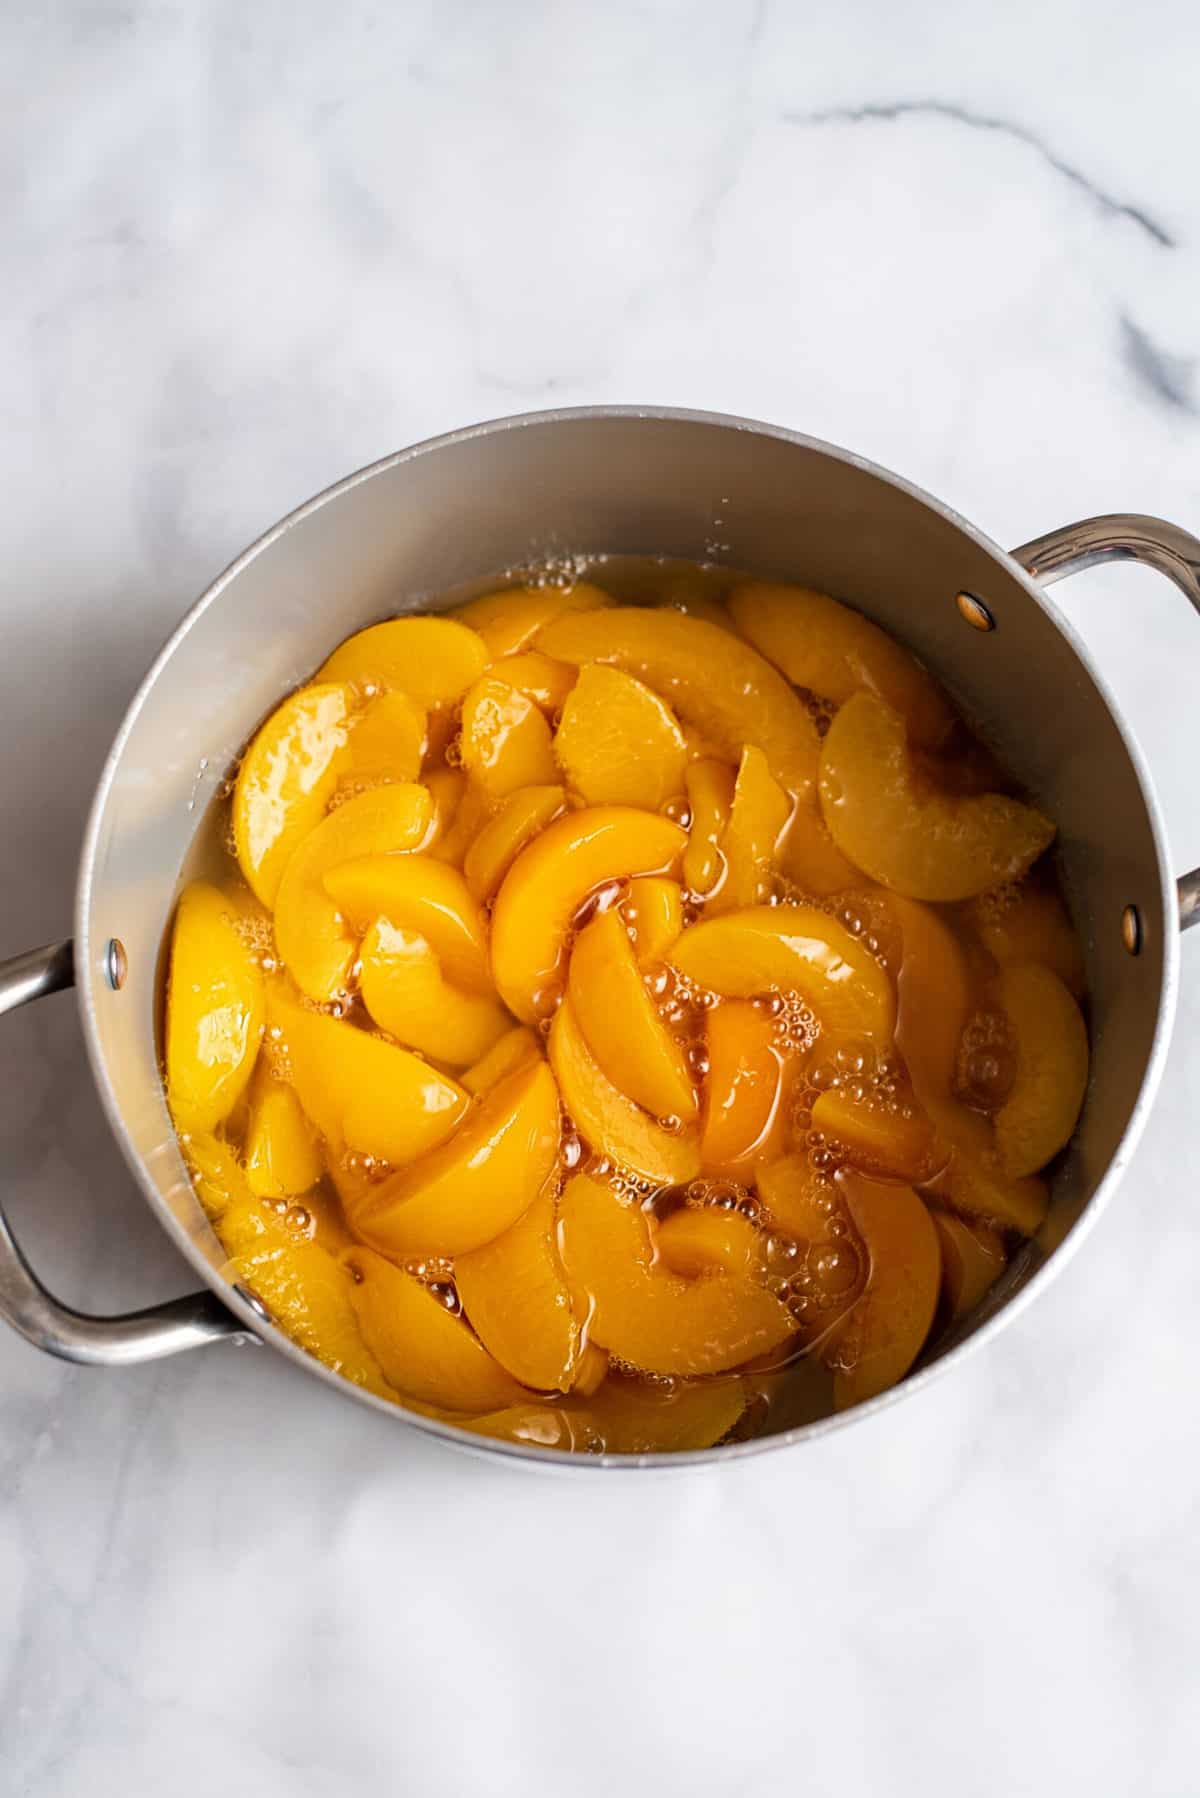 pour both cans of peaches into medium pot